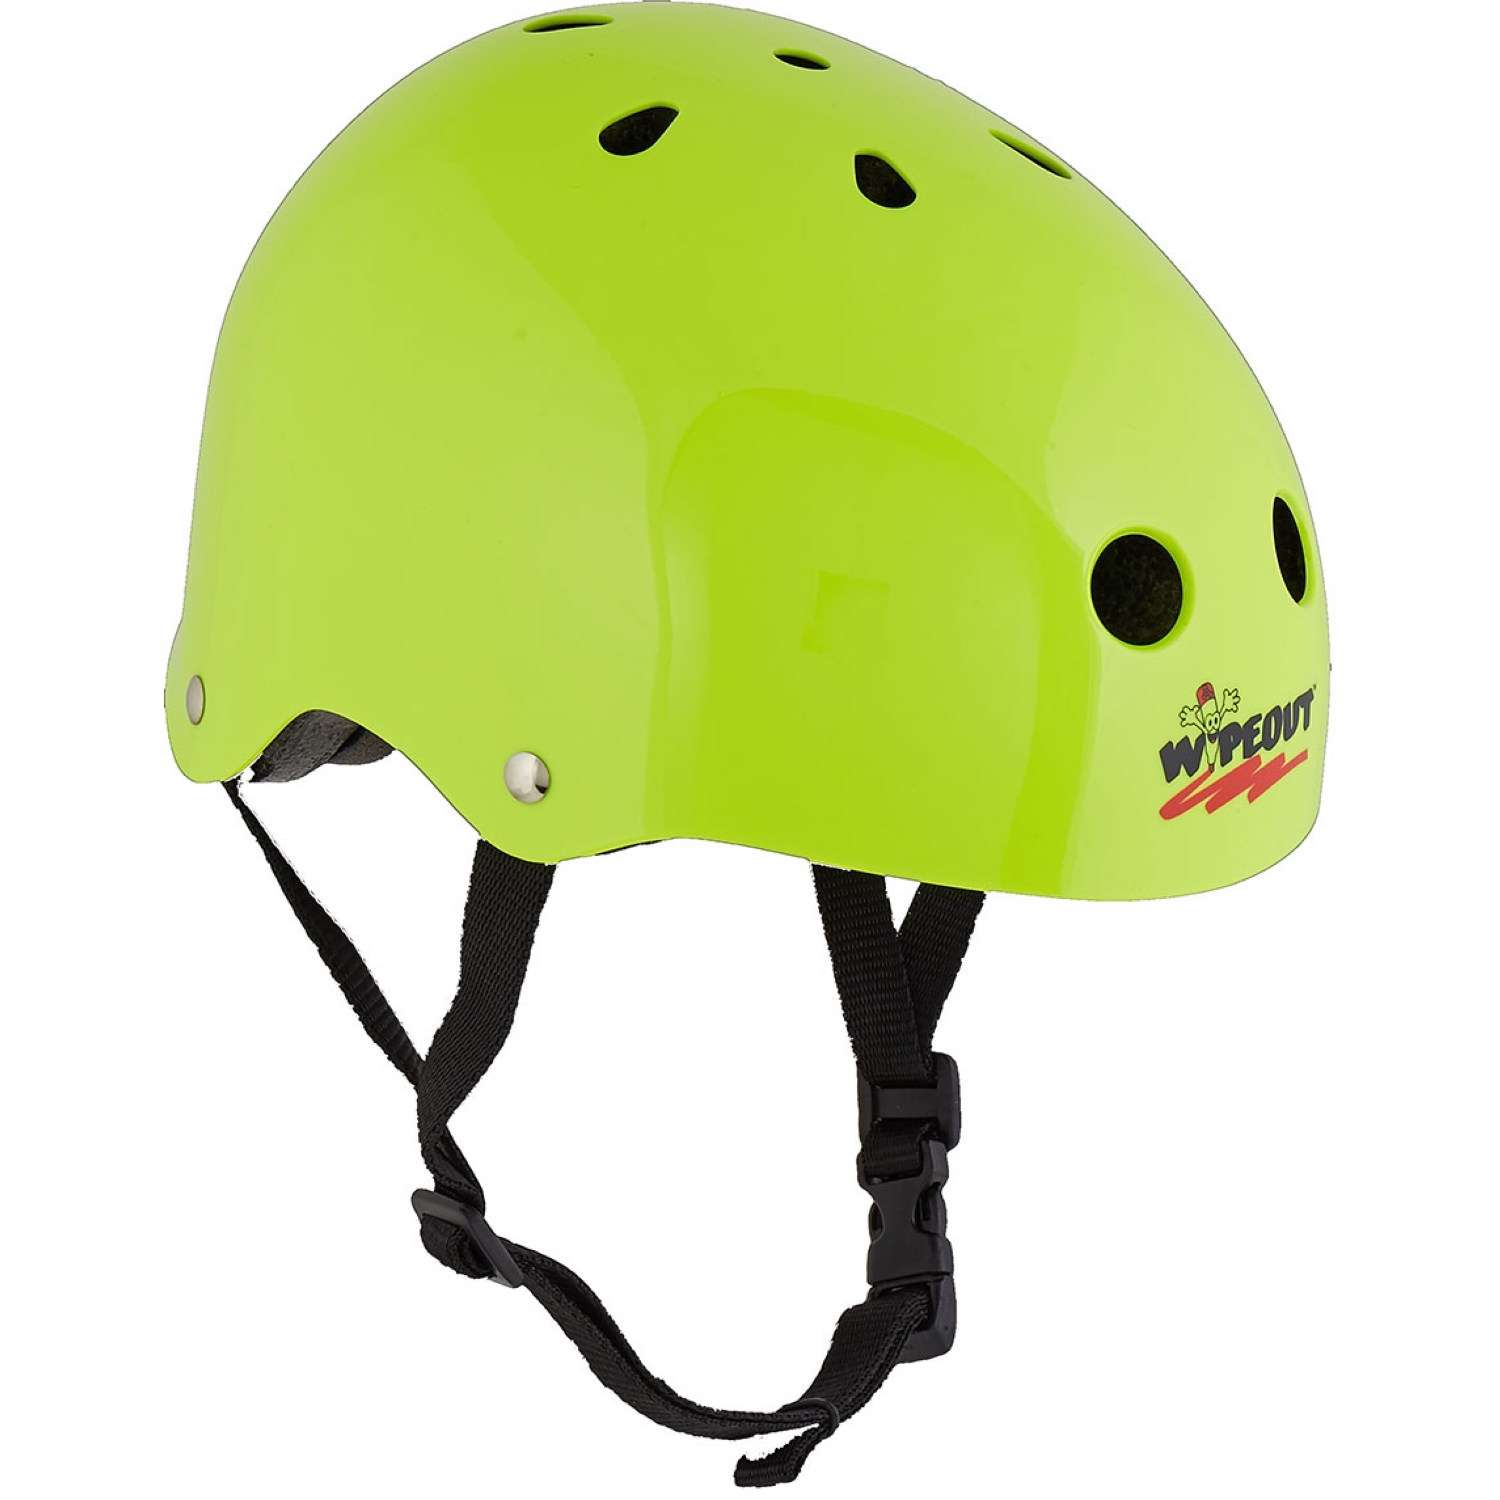 Шлем защитный WIPEOUT Neon Zest с фломастерами и трафаретами / размер L 8+ / обхват головы 52-56 см. - фото 2